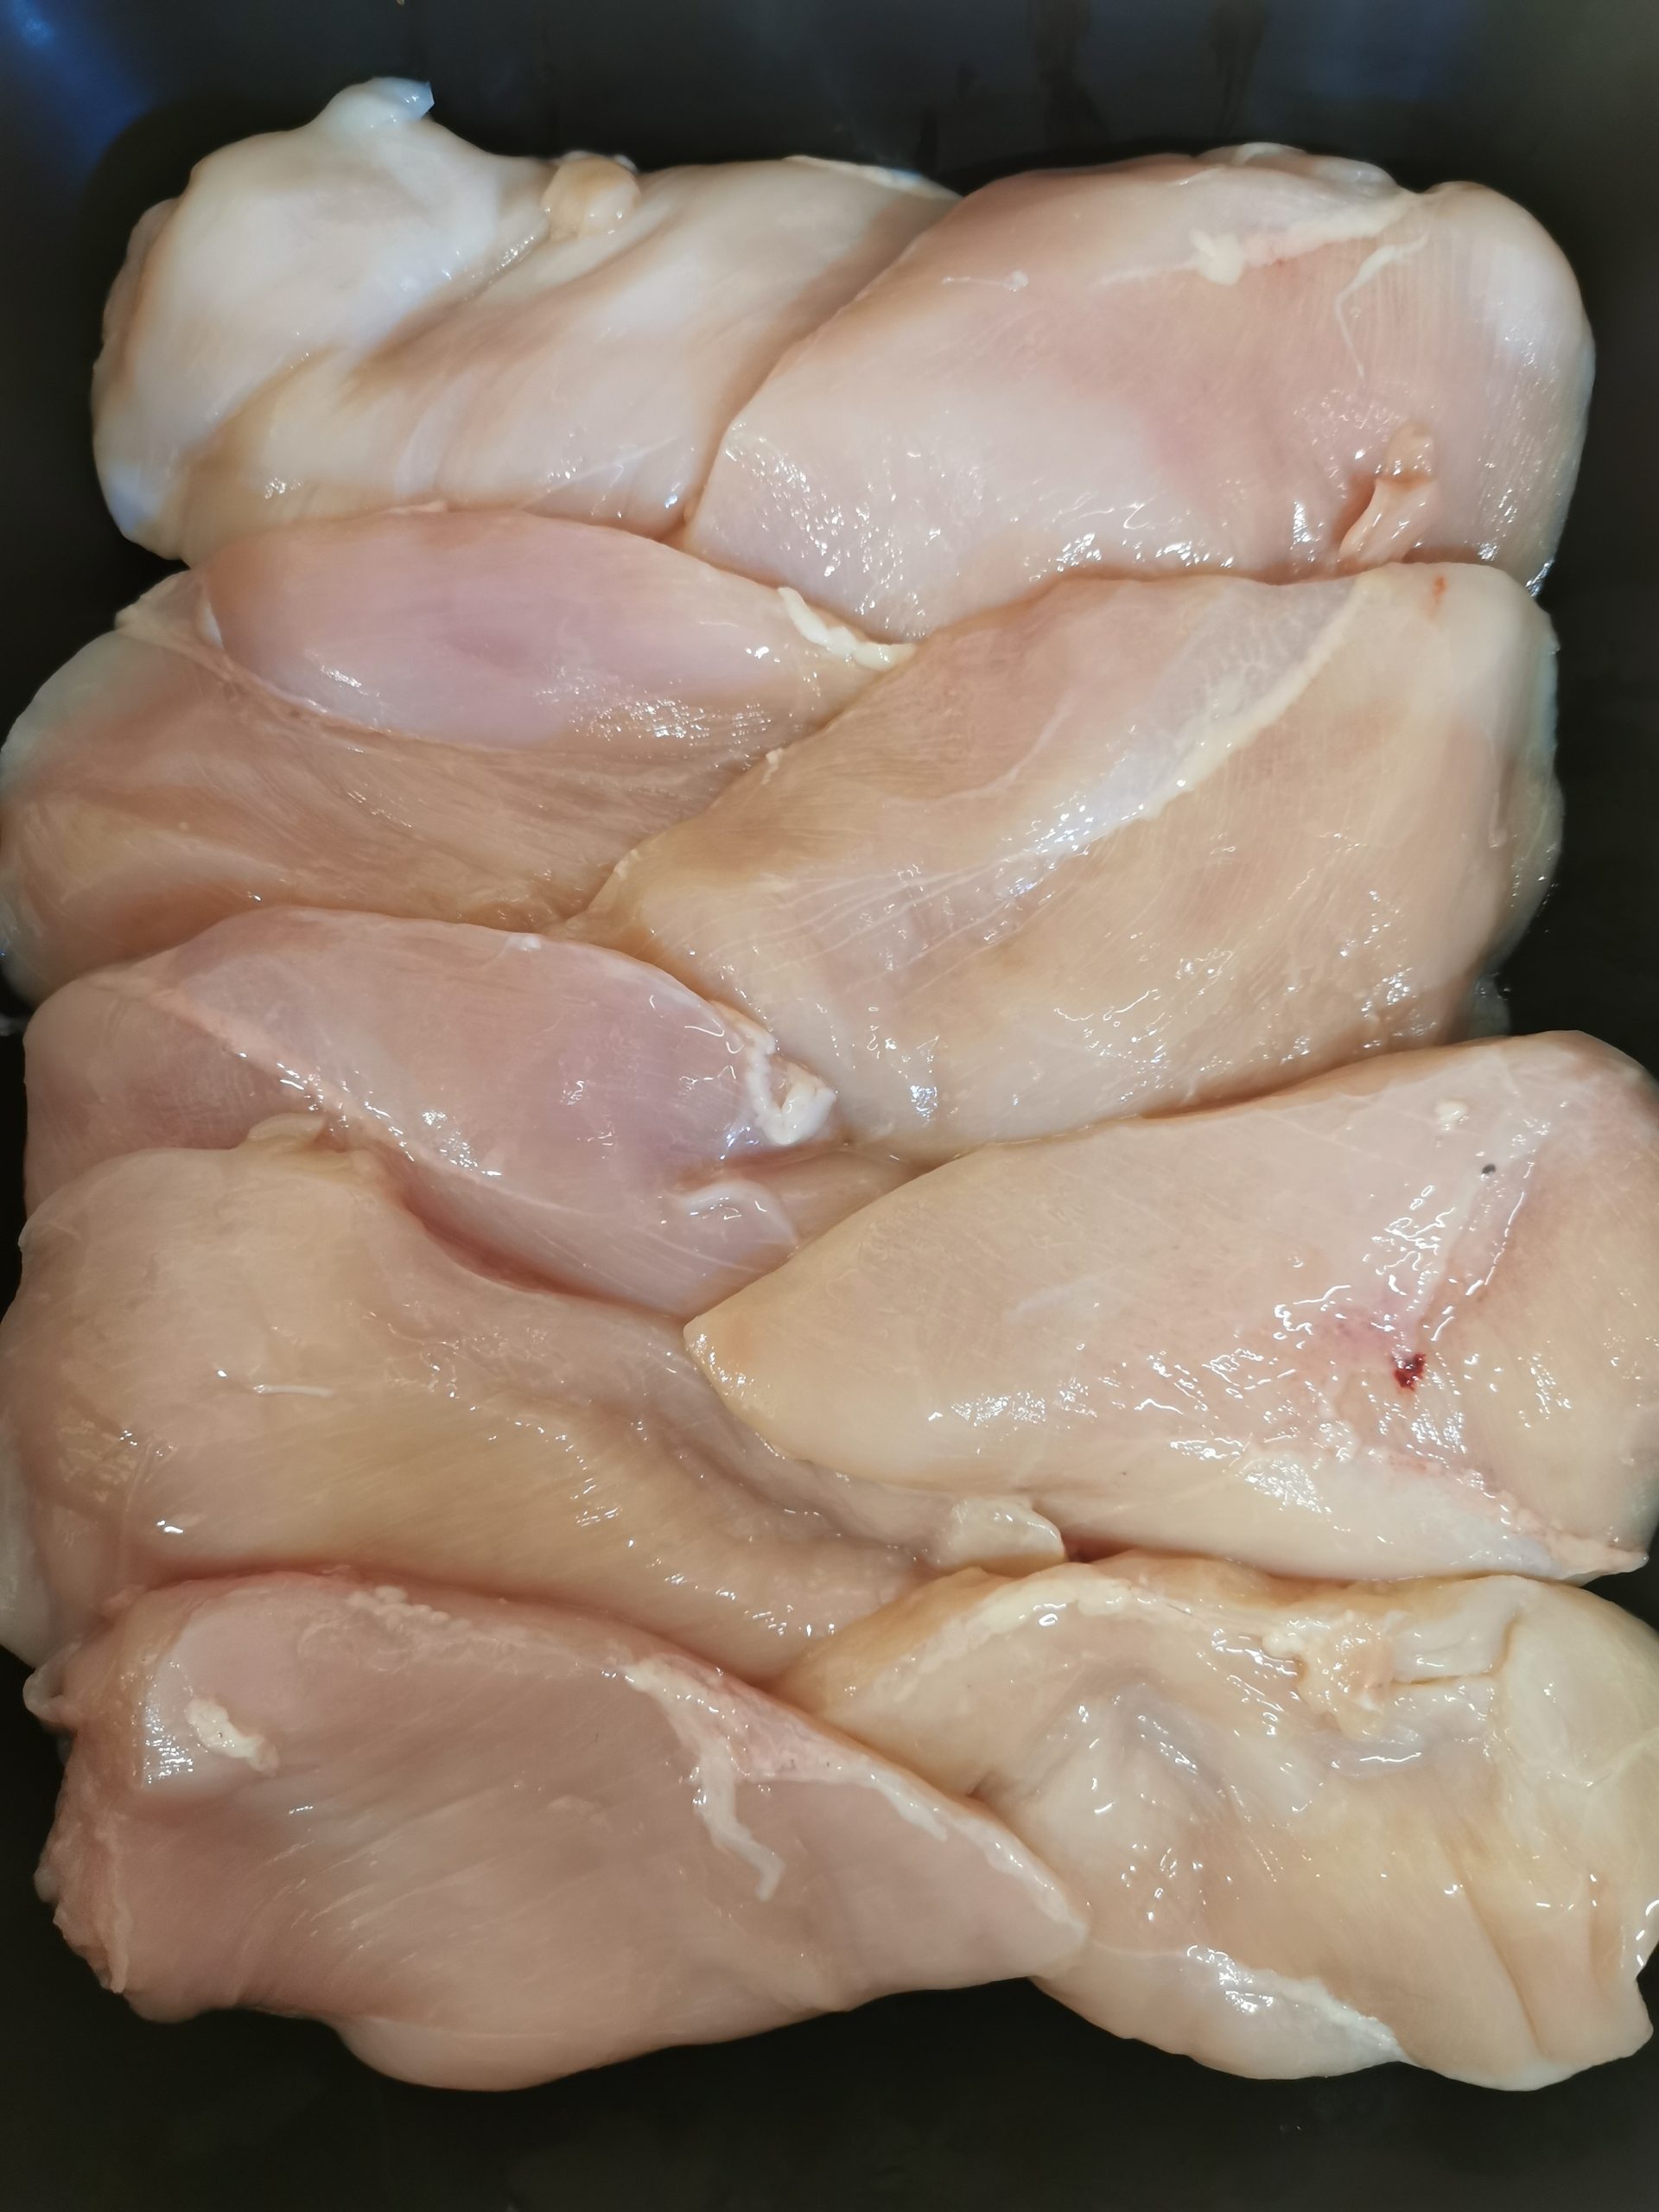 6 oz Chicken Breast Smokehaus Meats amp Deli